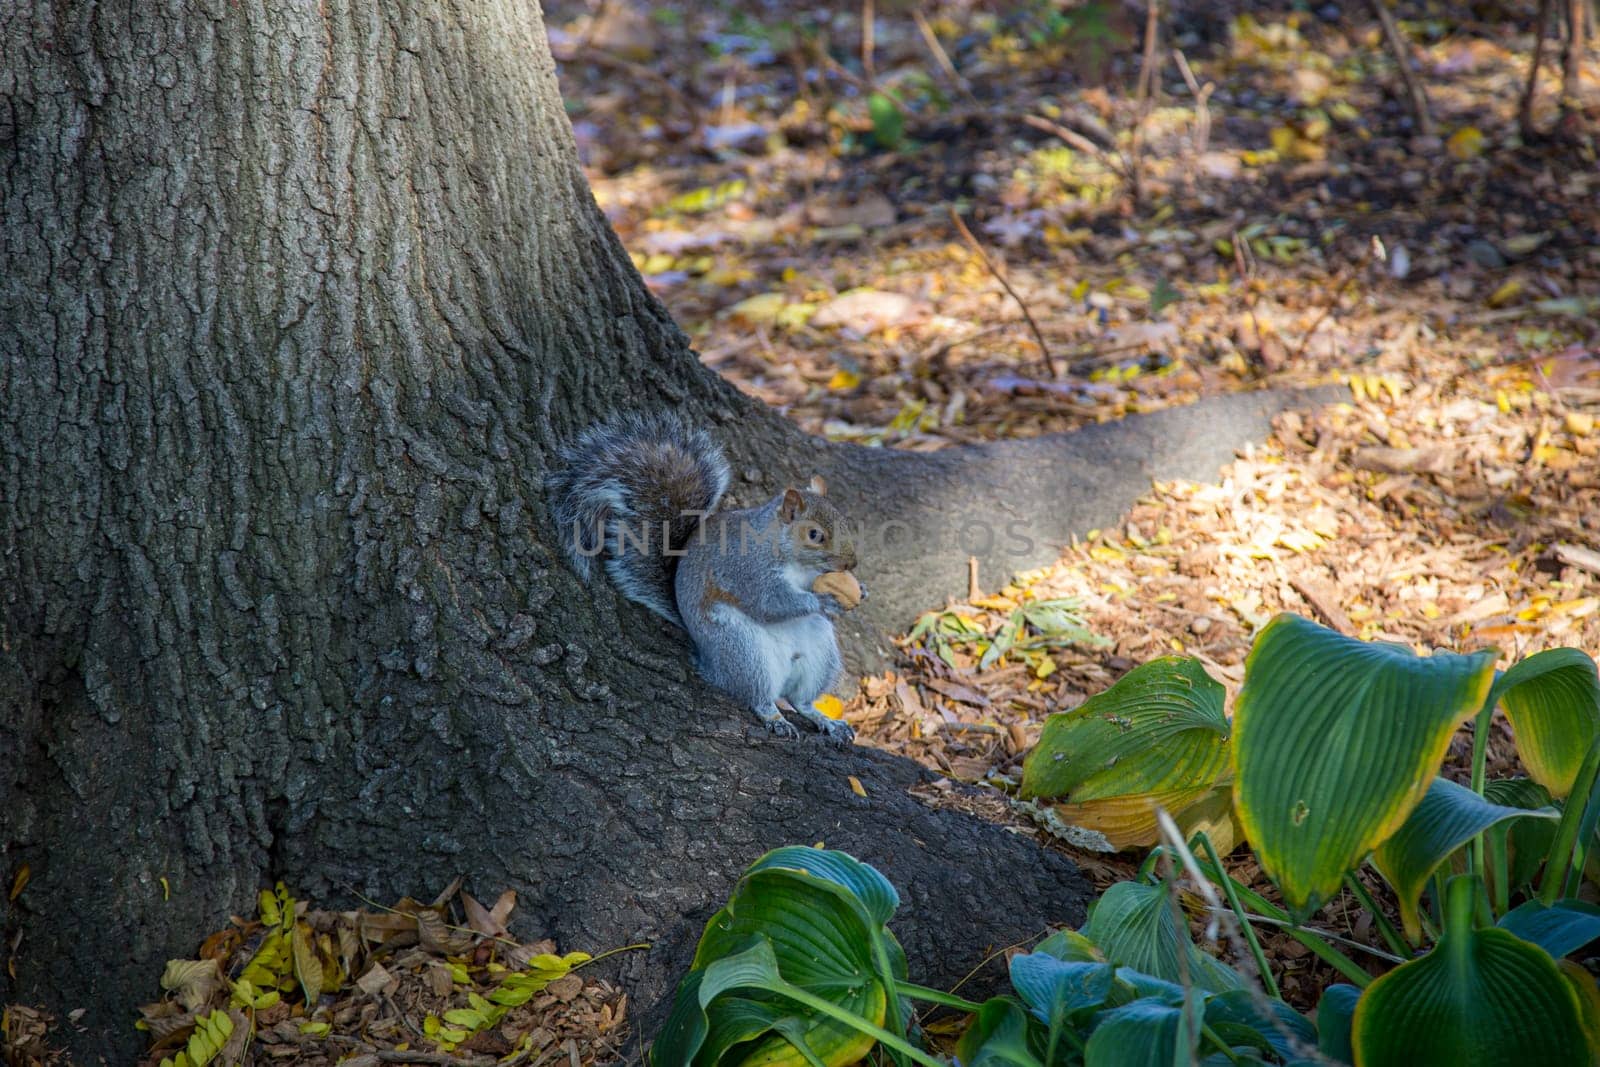 Eastern grey squirrel in a New York public park by oliverfoerstner